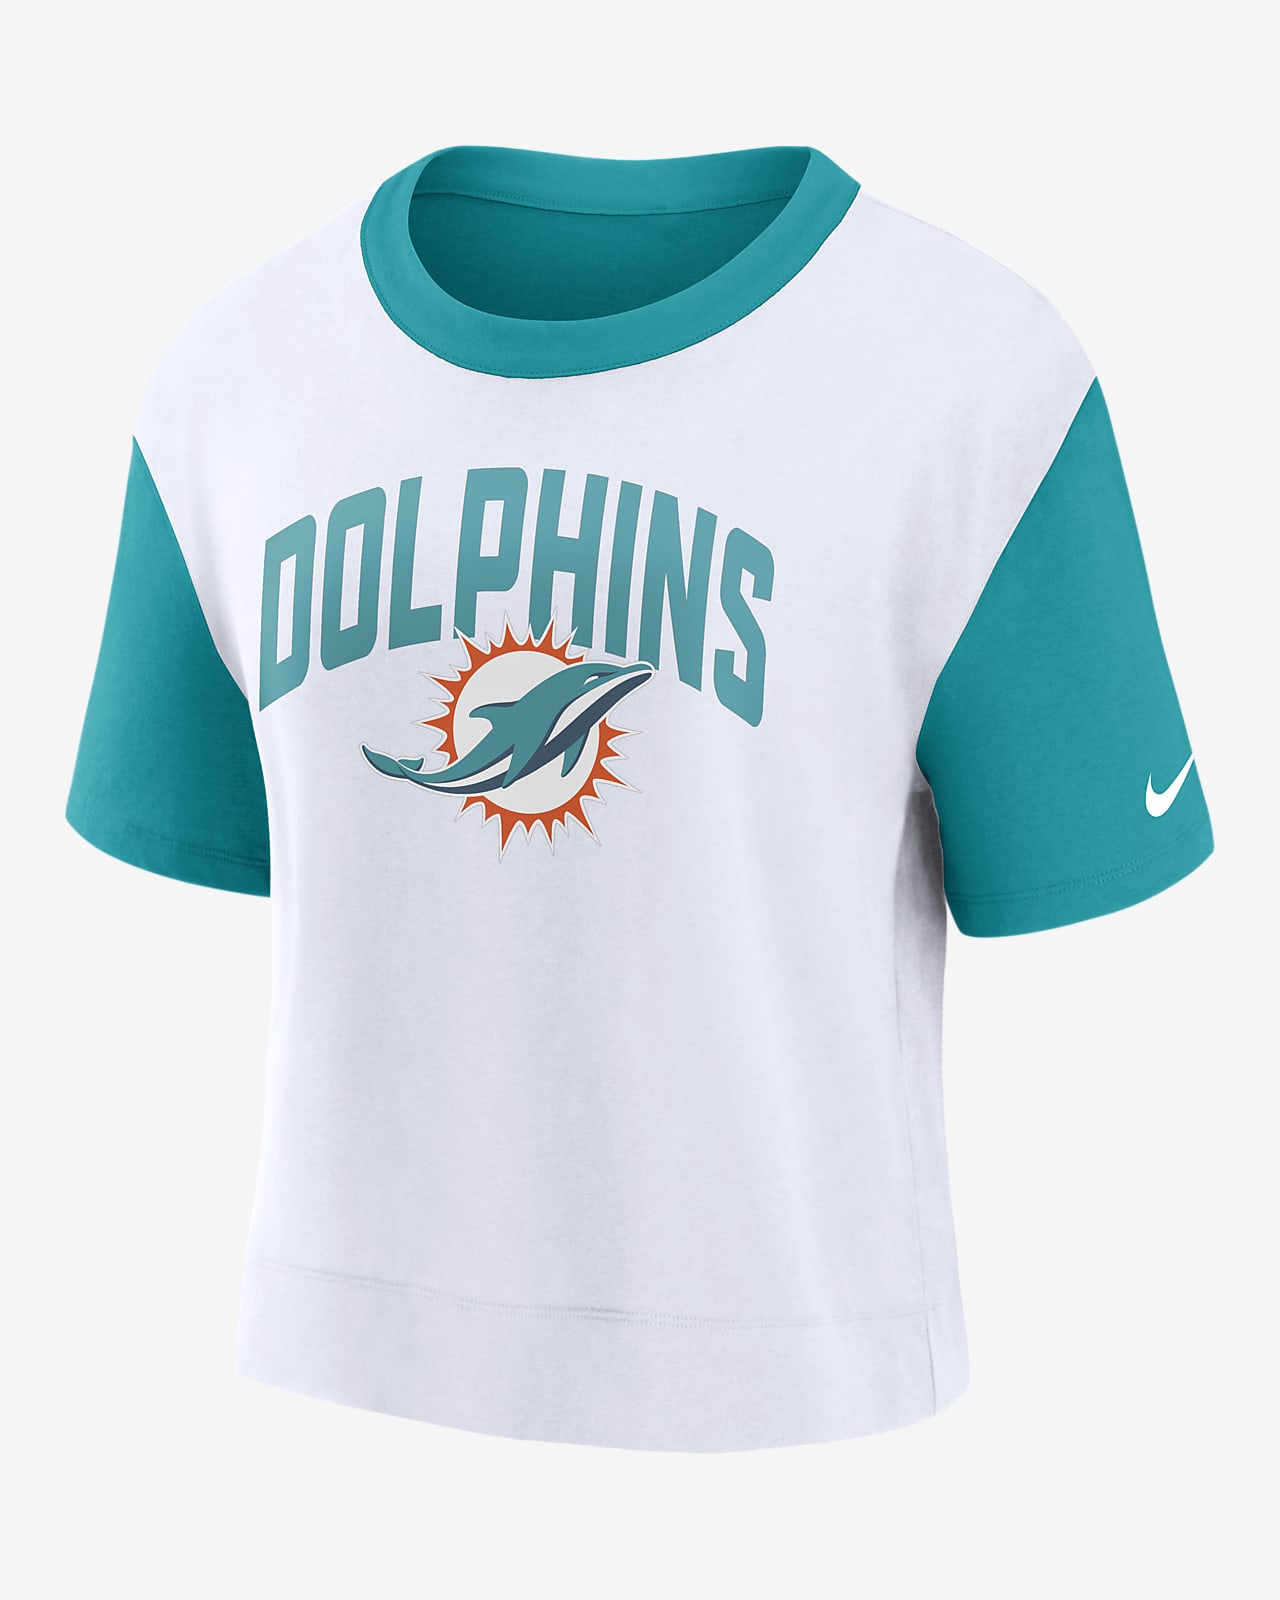 miami dolphins shirt